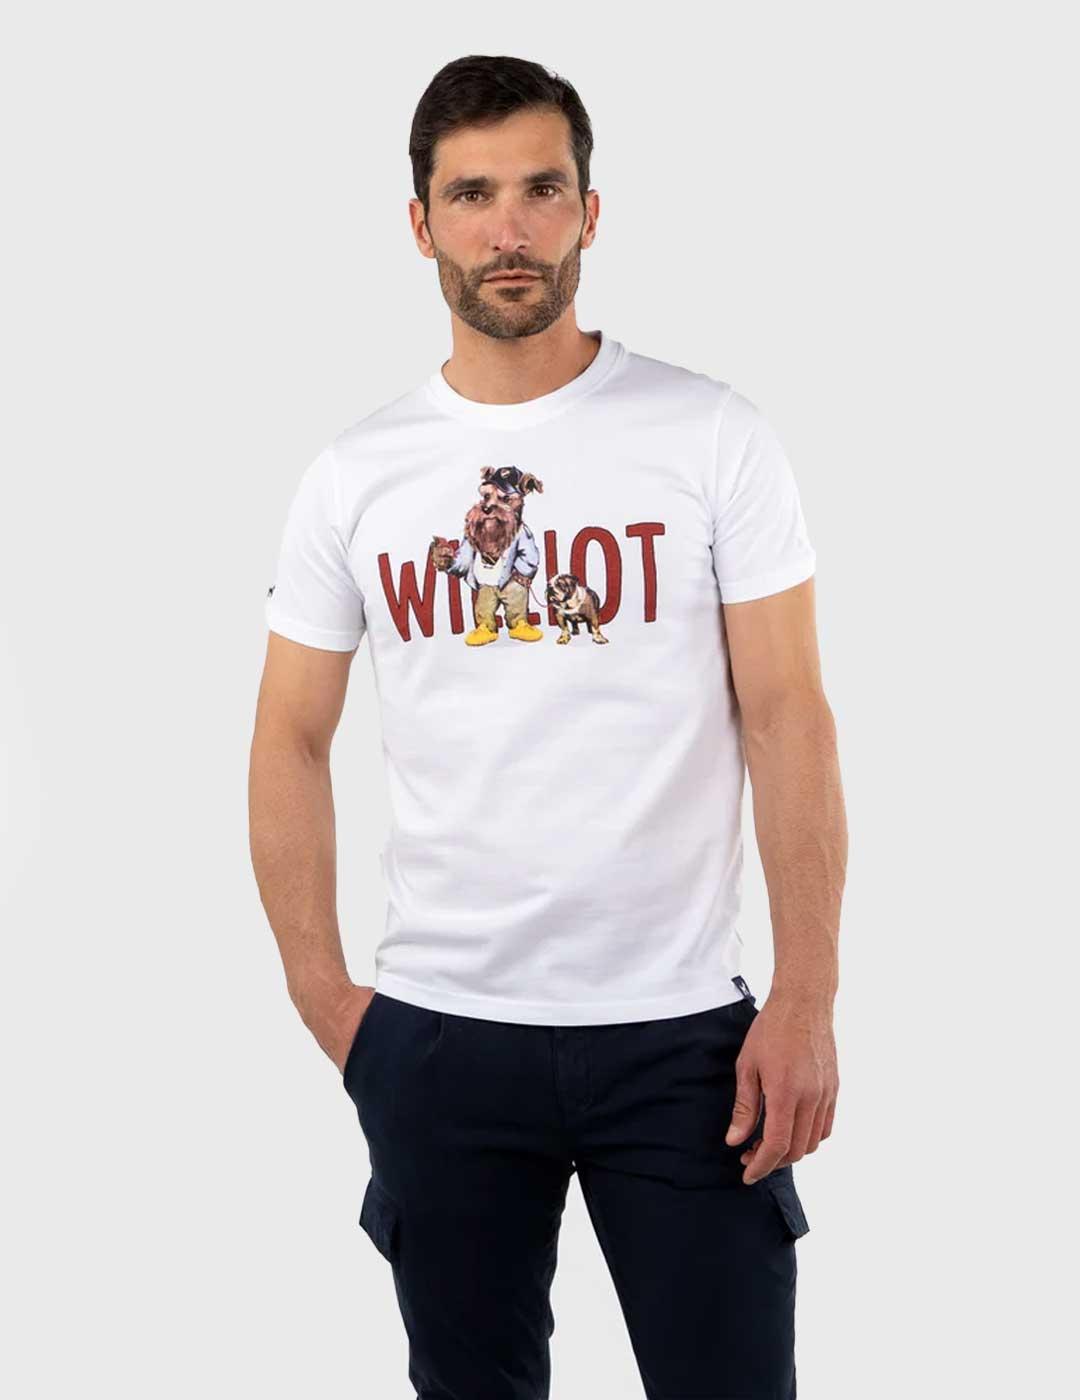 Williot Bulldog Camiseta blanca para hombre